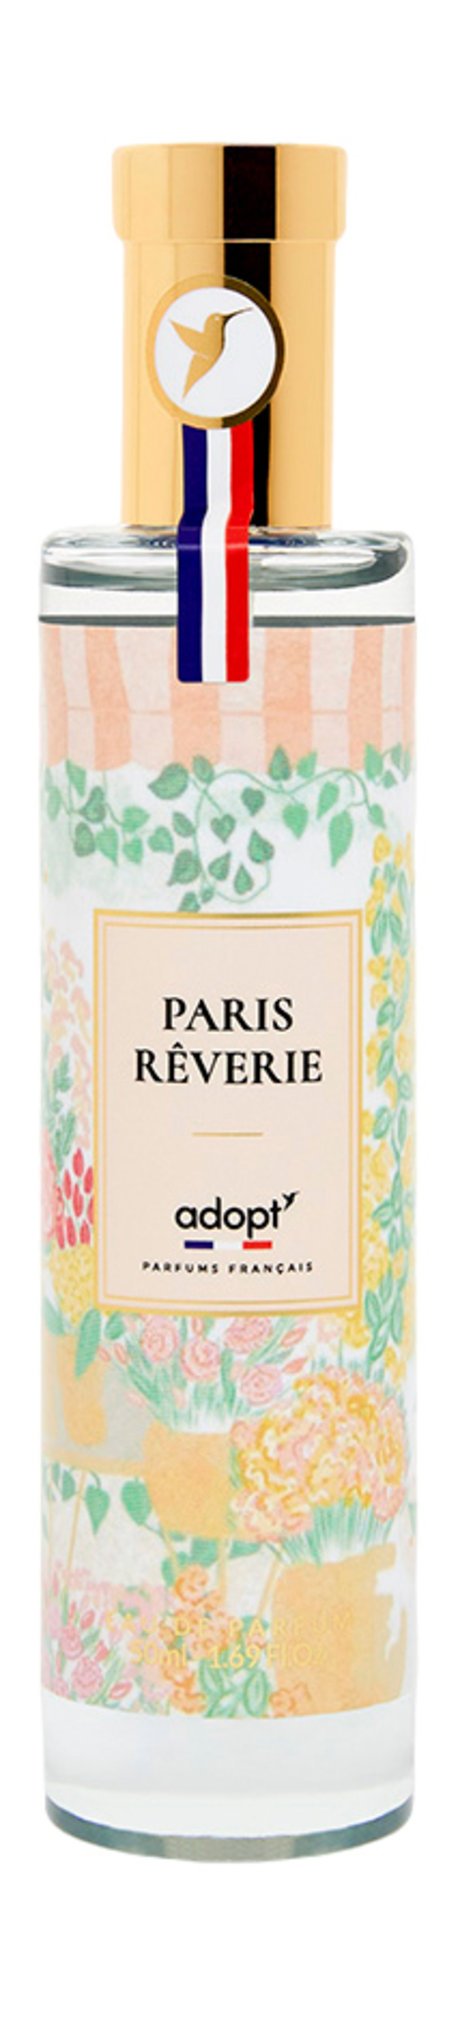 Adopt Paris Reverie Eau De Parfum